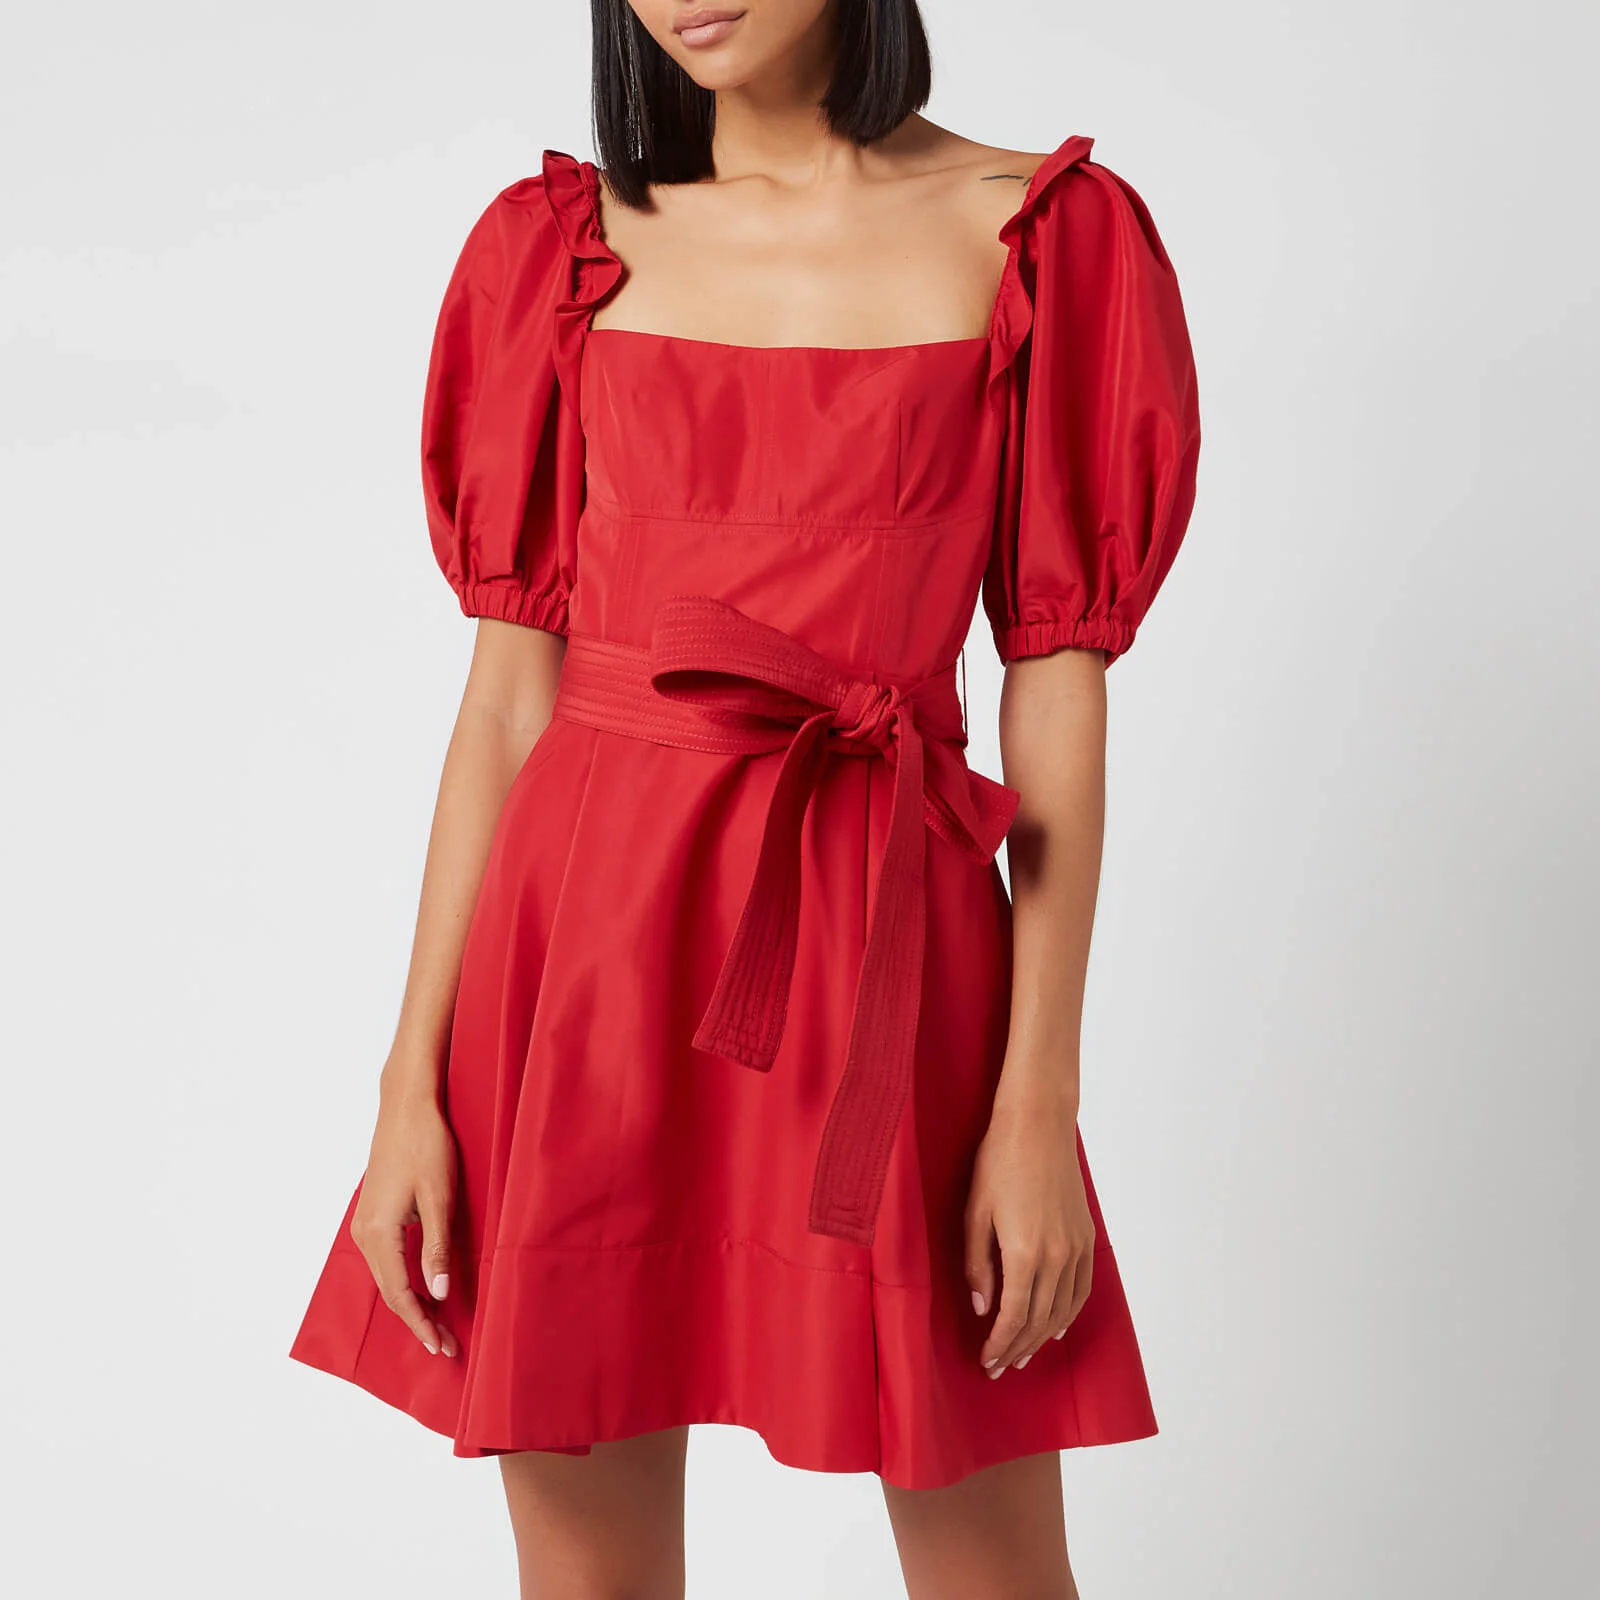 Self-Portrait Women's Taffeta Mini Dress - Red Image 1